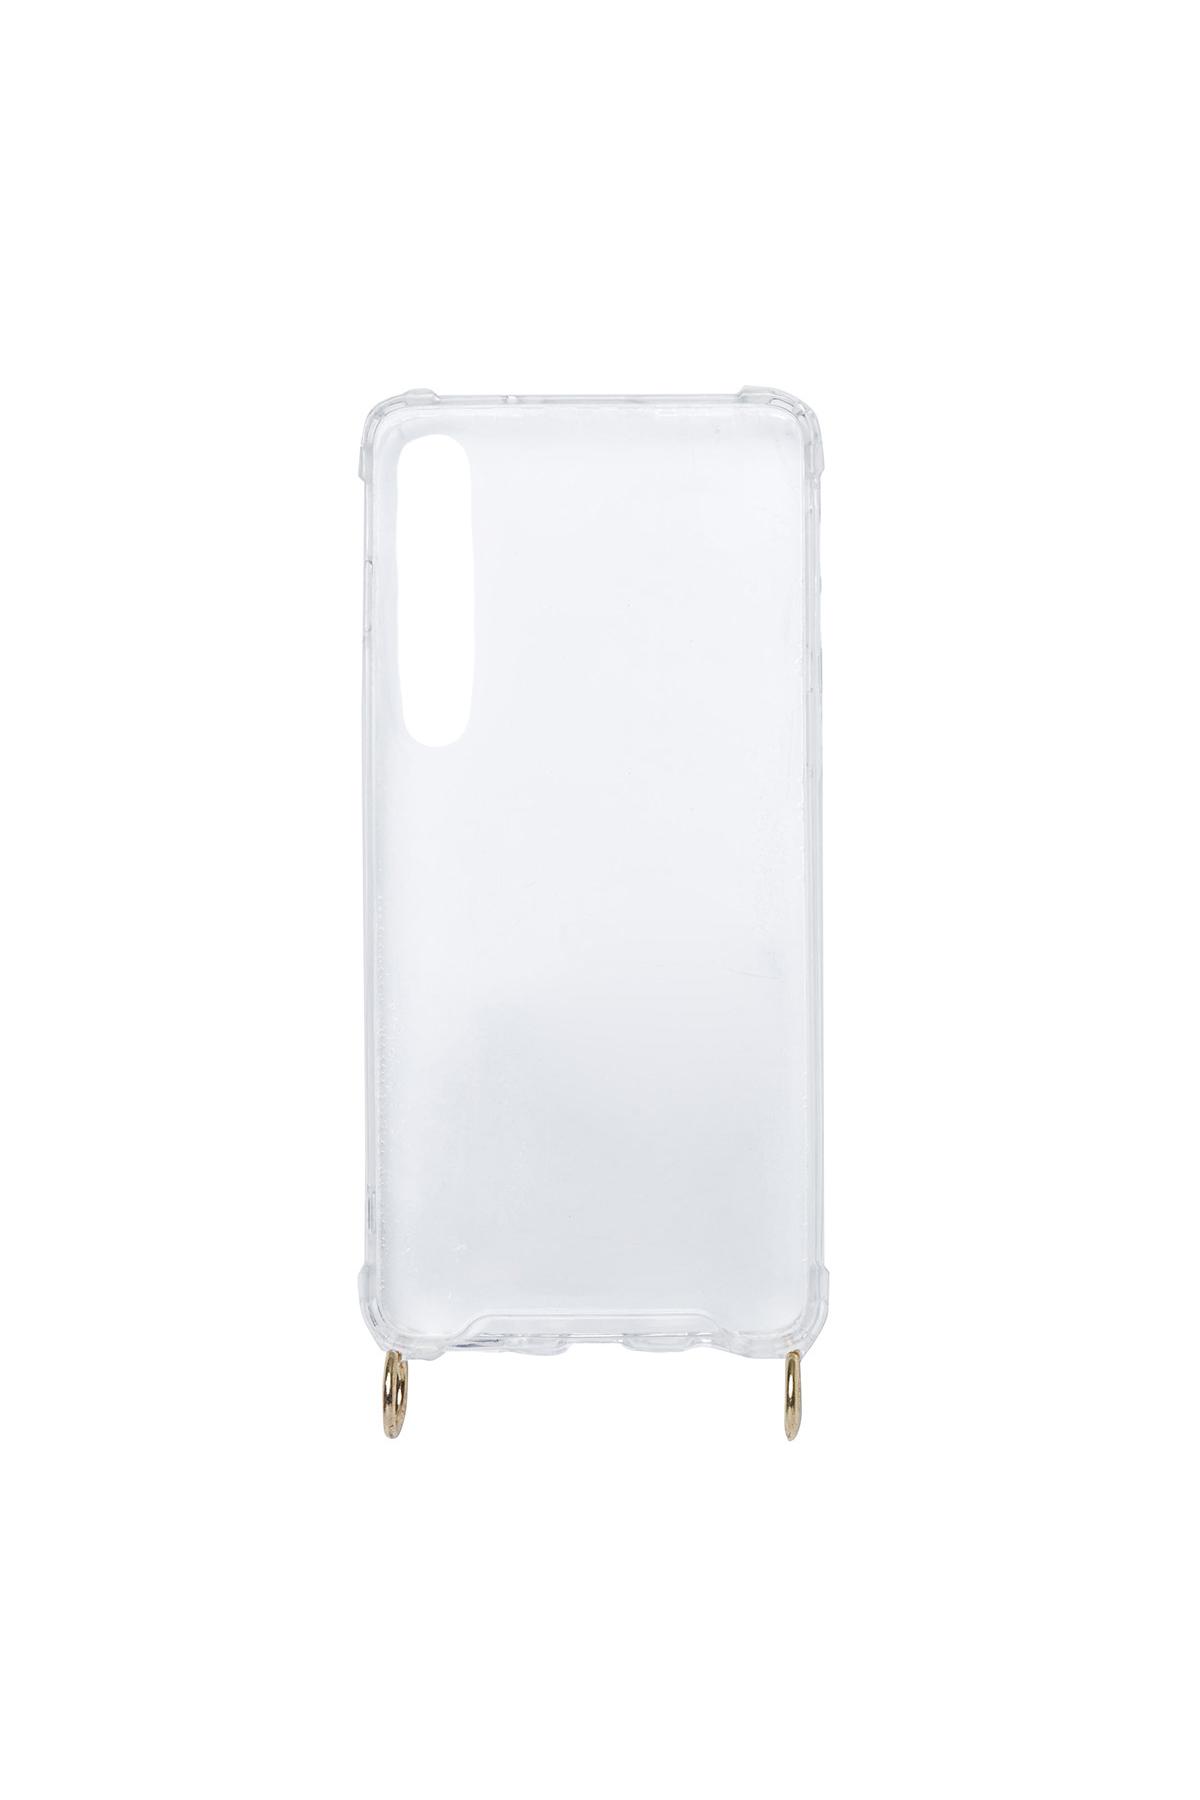 Huawei Phone case P20 Pro White Plastic